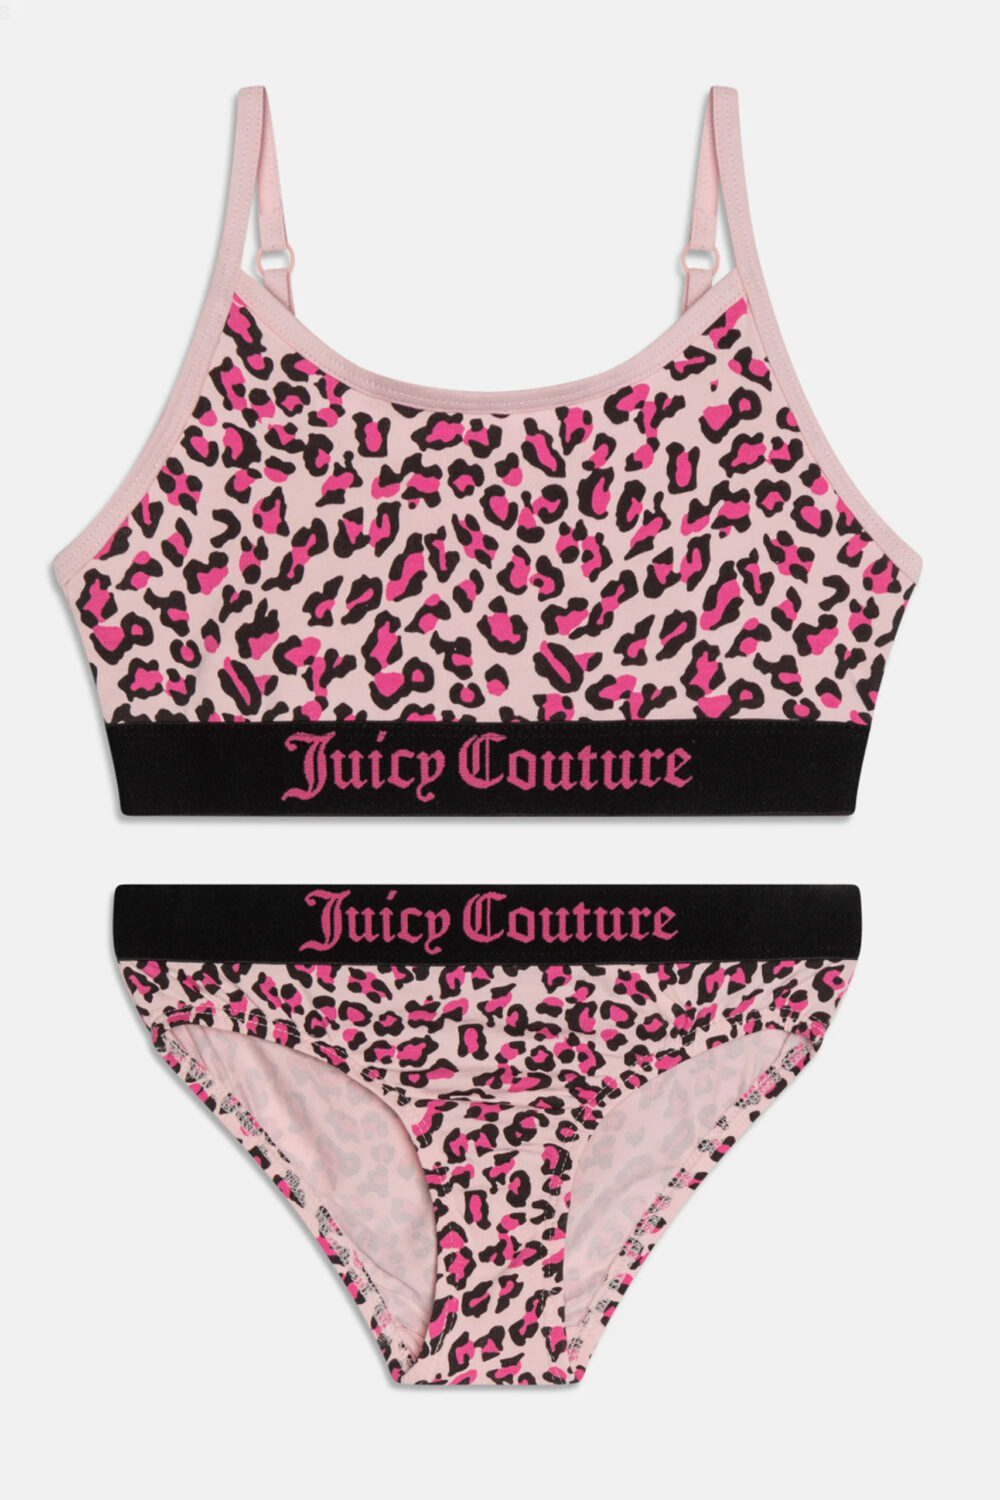 Juicy Couture Leopard Underwear set